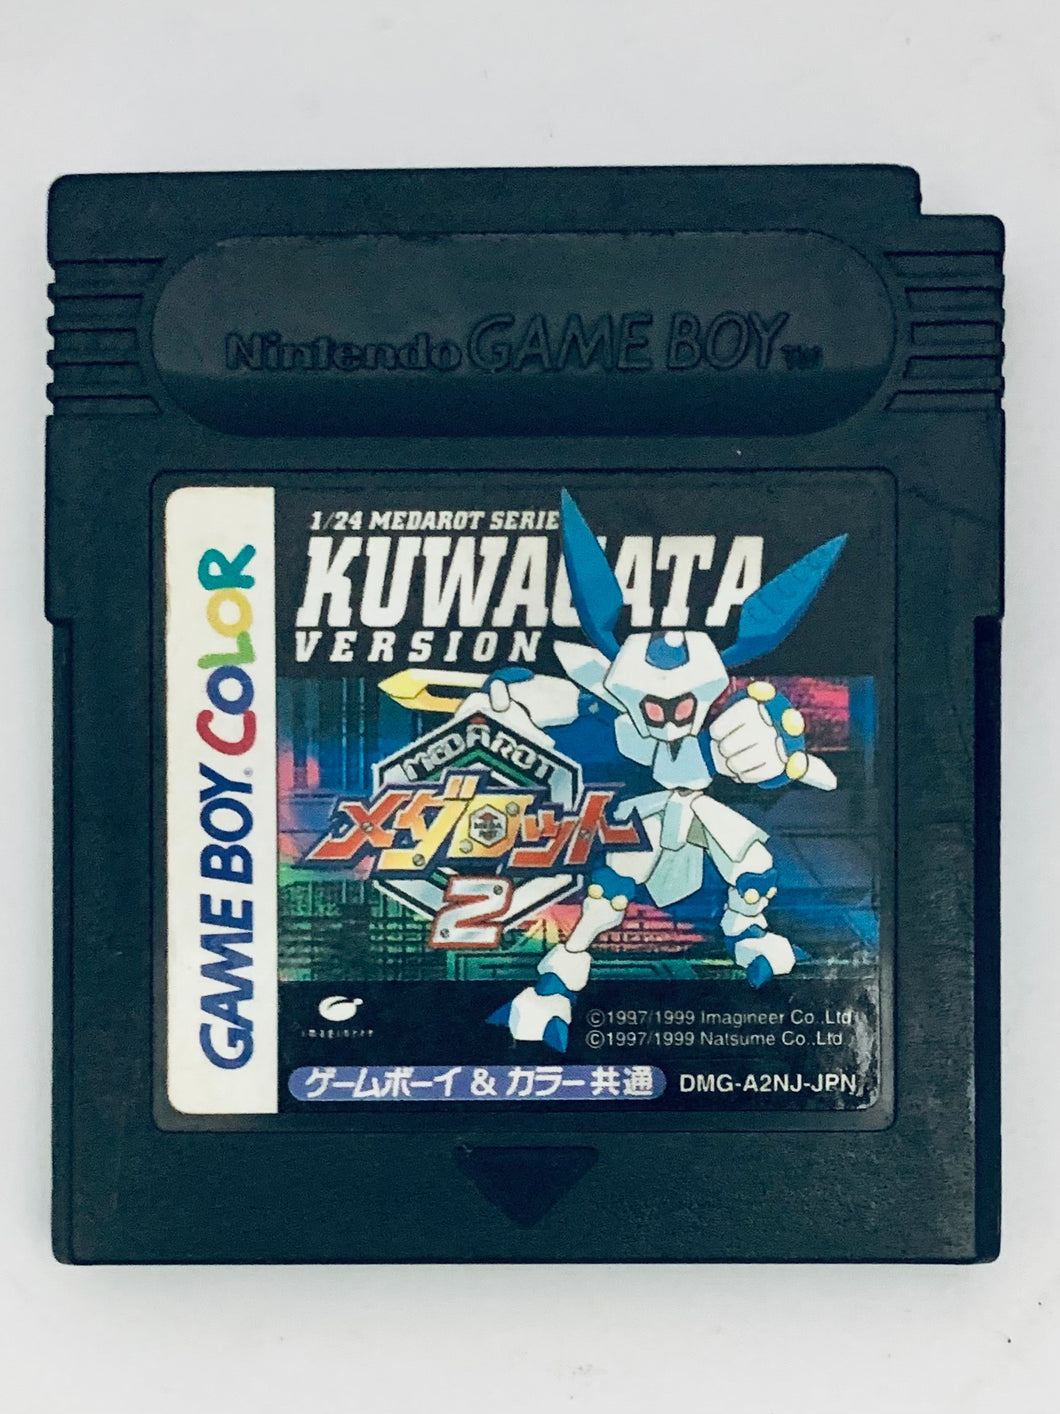 Medarot 2: Kuwagata Version - GameBoy Color - Game Boy - Pocket - GBC - GBA - JP - Cartridge (DMG-A2NJ-JPN)